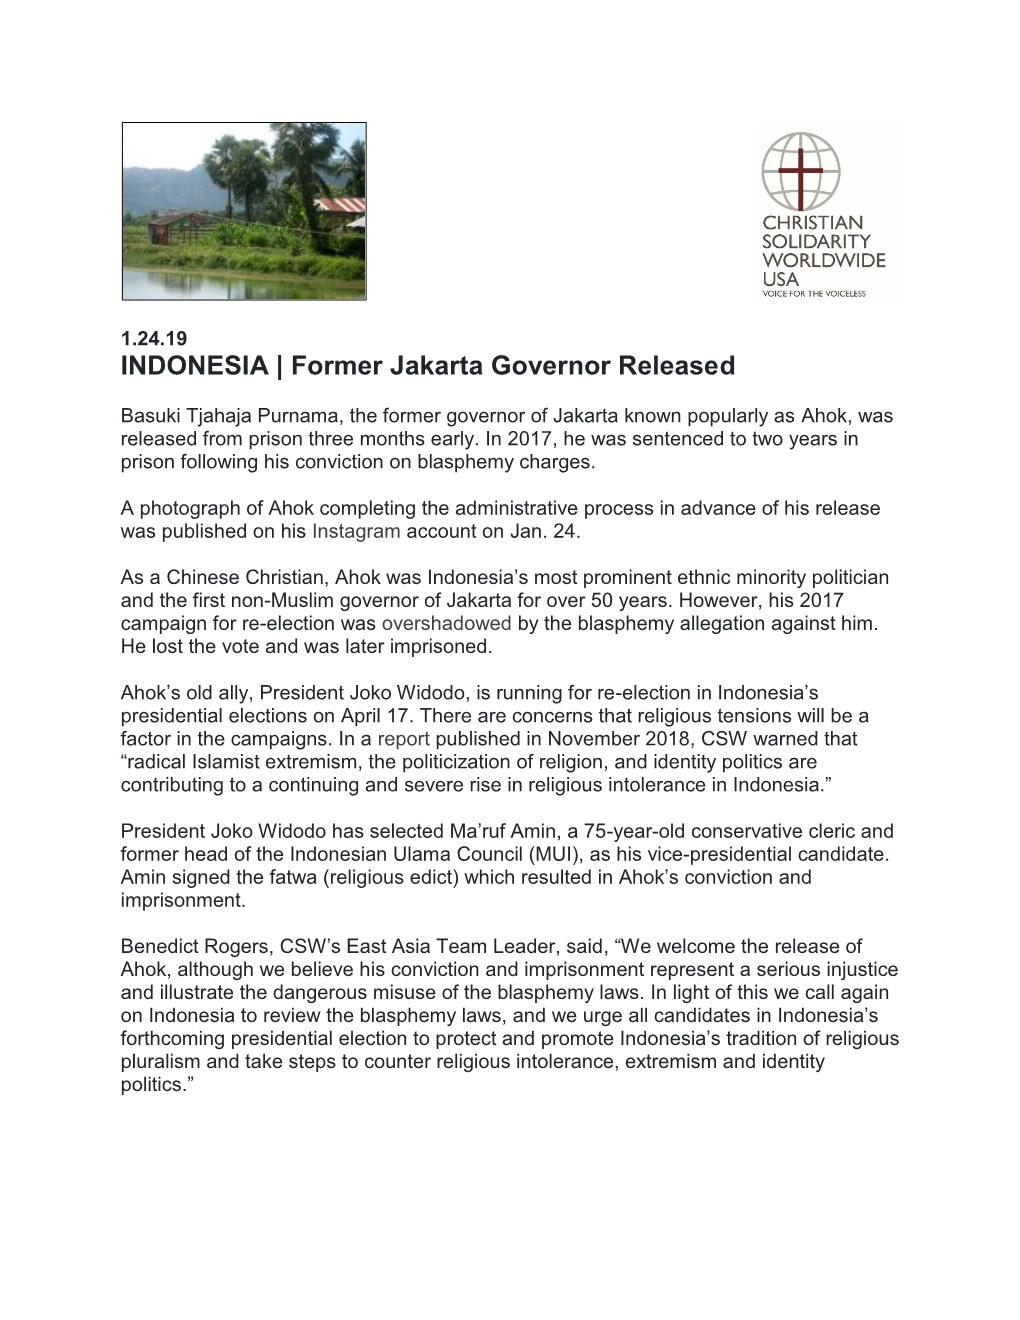 INDONESIA | Former Jakarta Governor Released